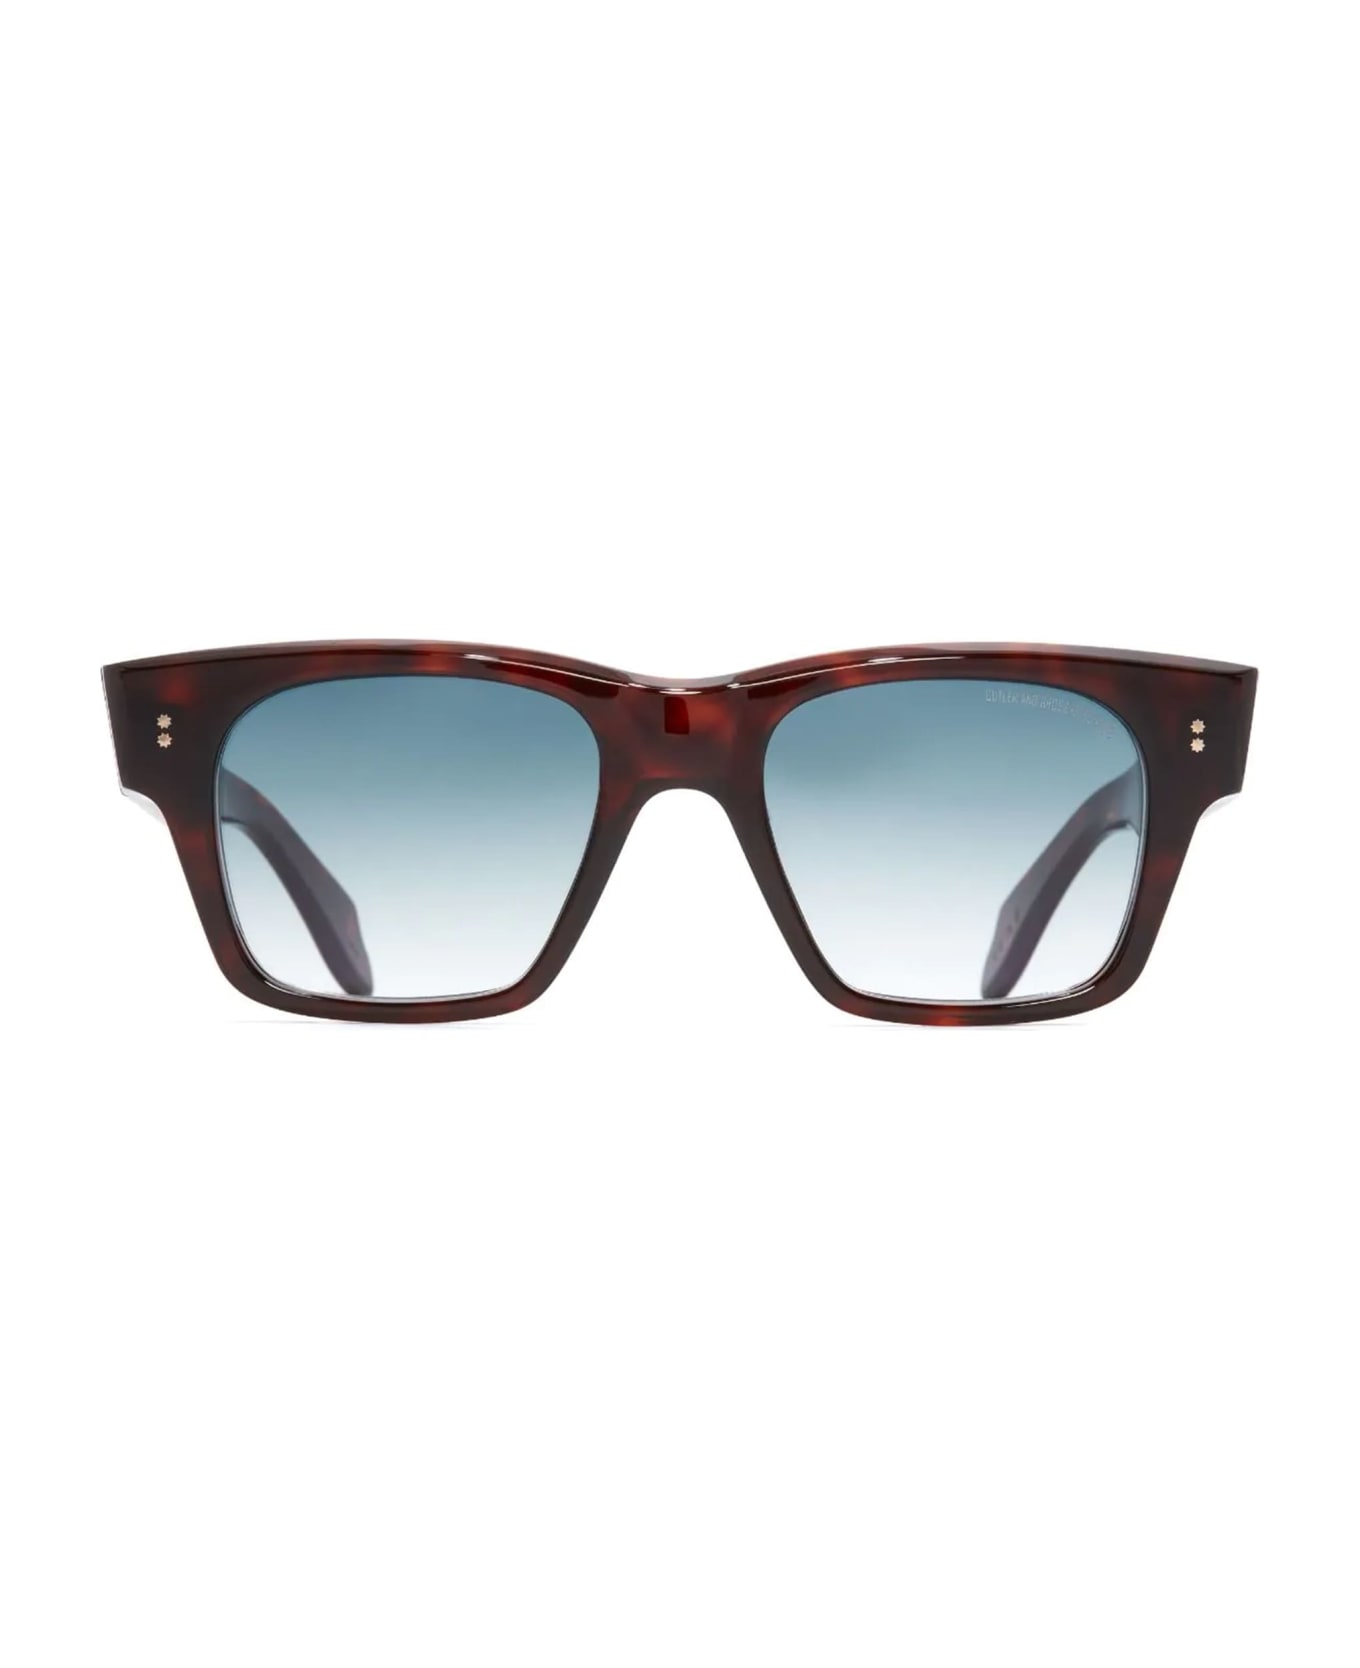 Cutler and Gross 9690 / Dark Turtle Sunglasses - brown